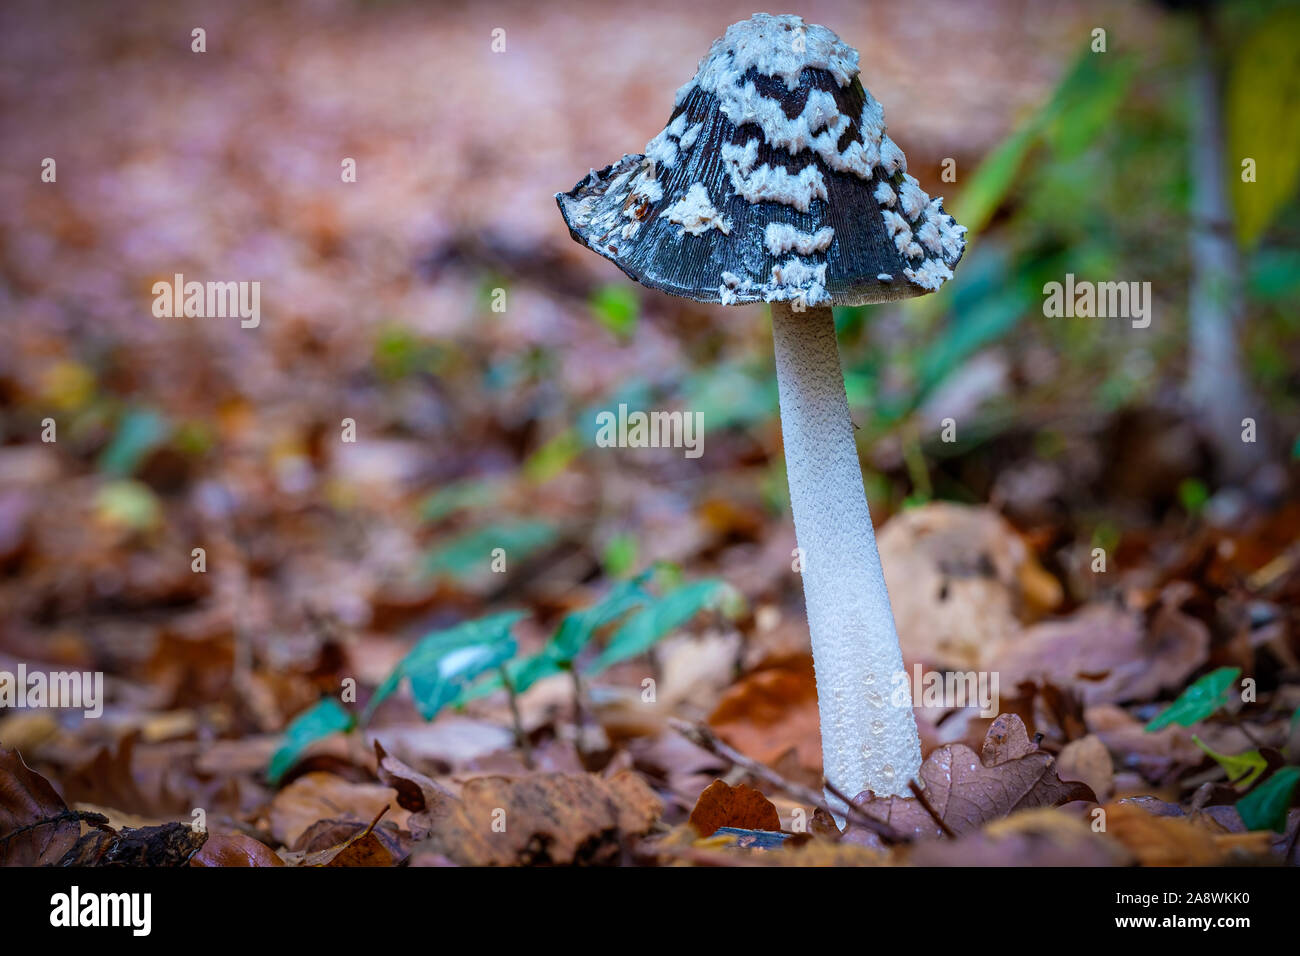 Beautiful poisonous Coprinopsis Picacea, Magpie fungus mushroom. Stock Photo